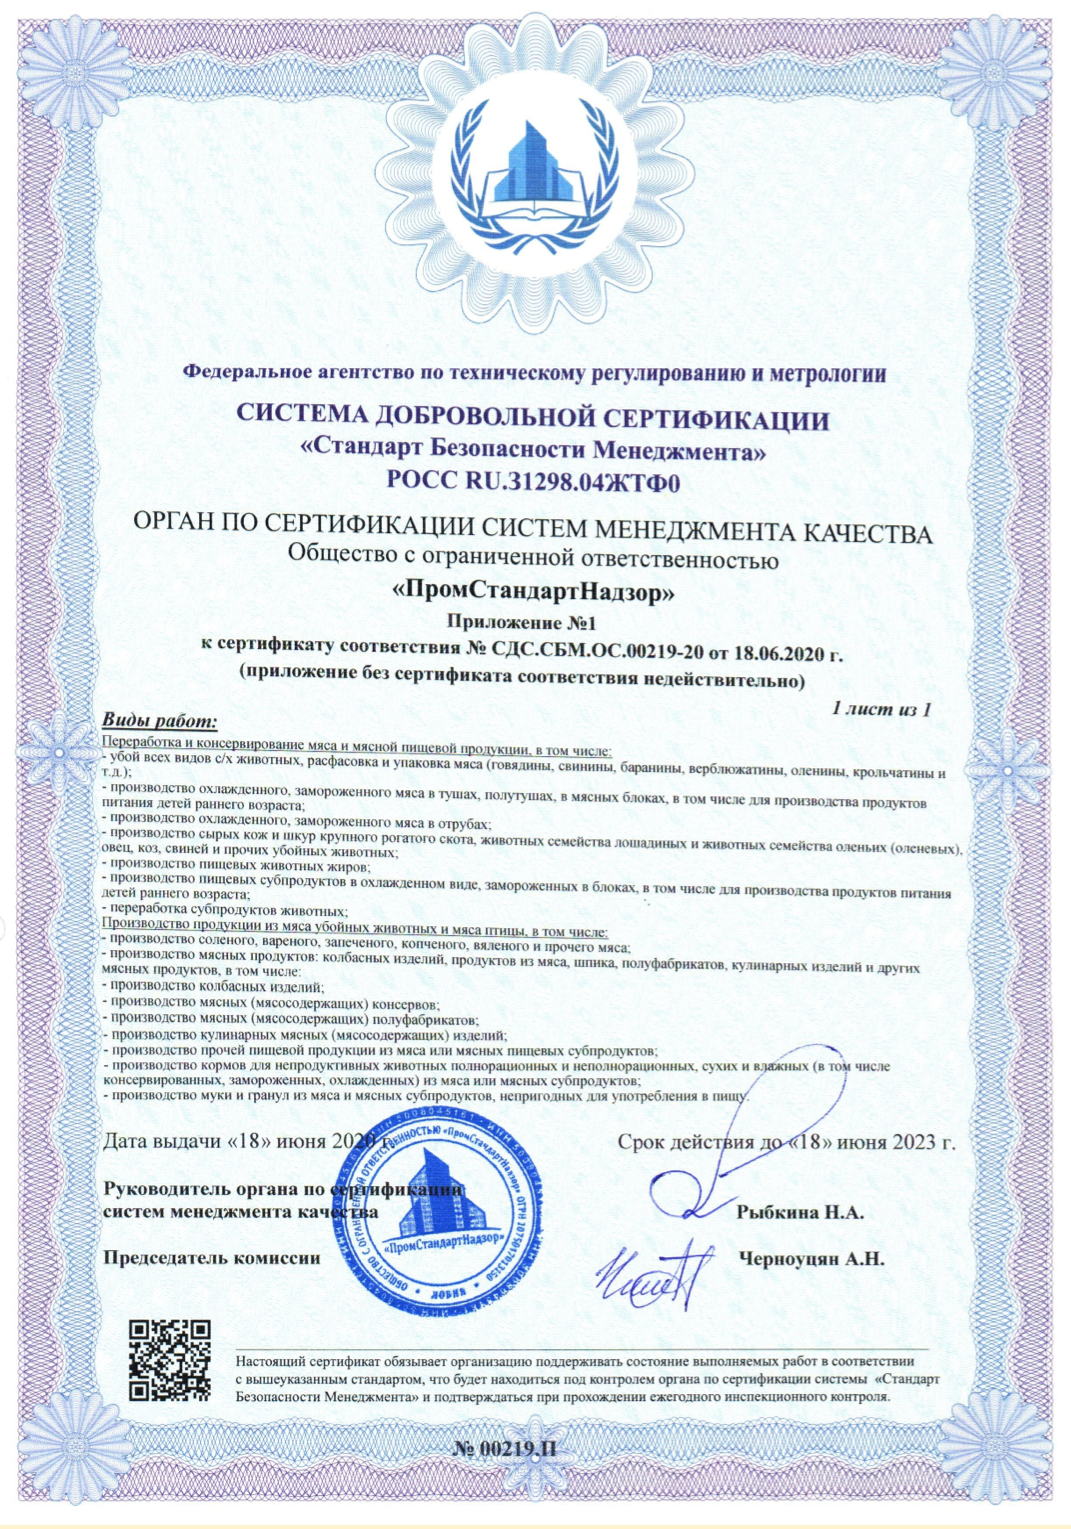 Сертификат ХАССП